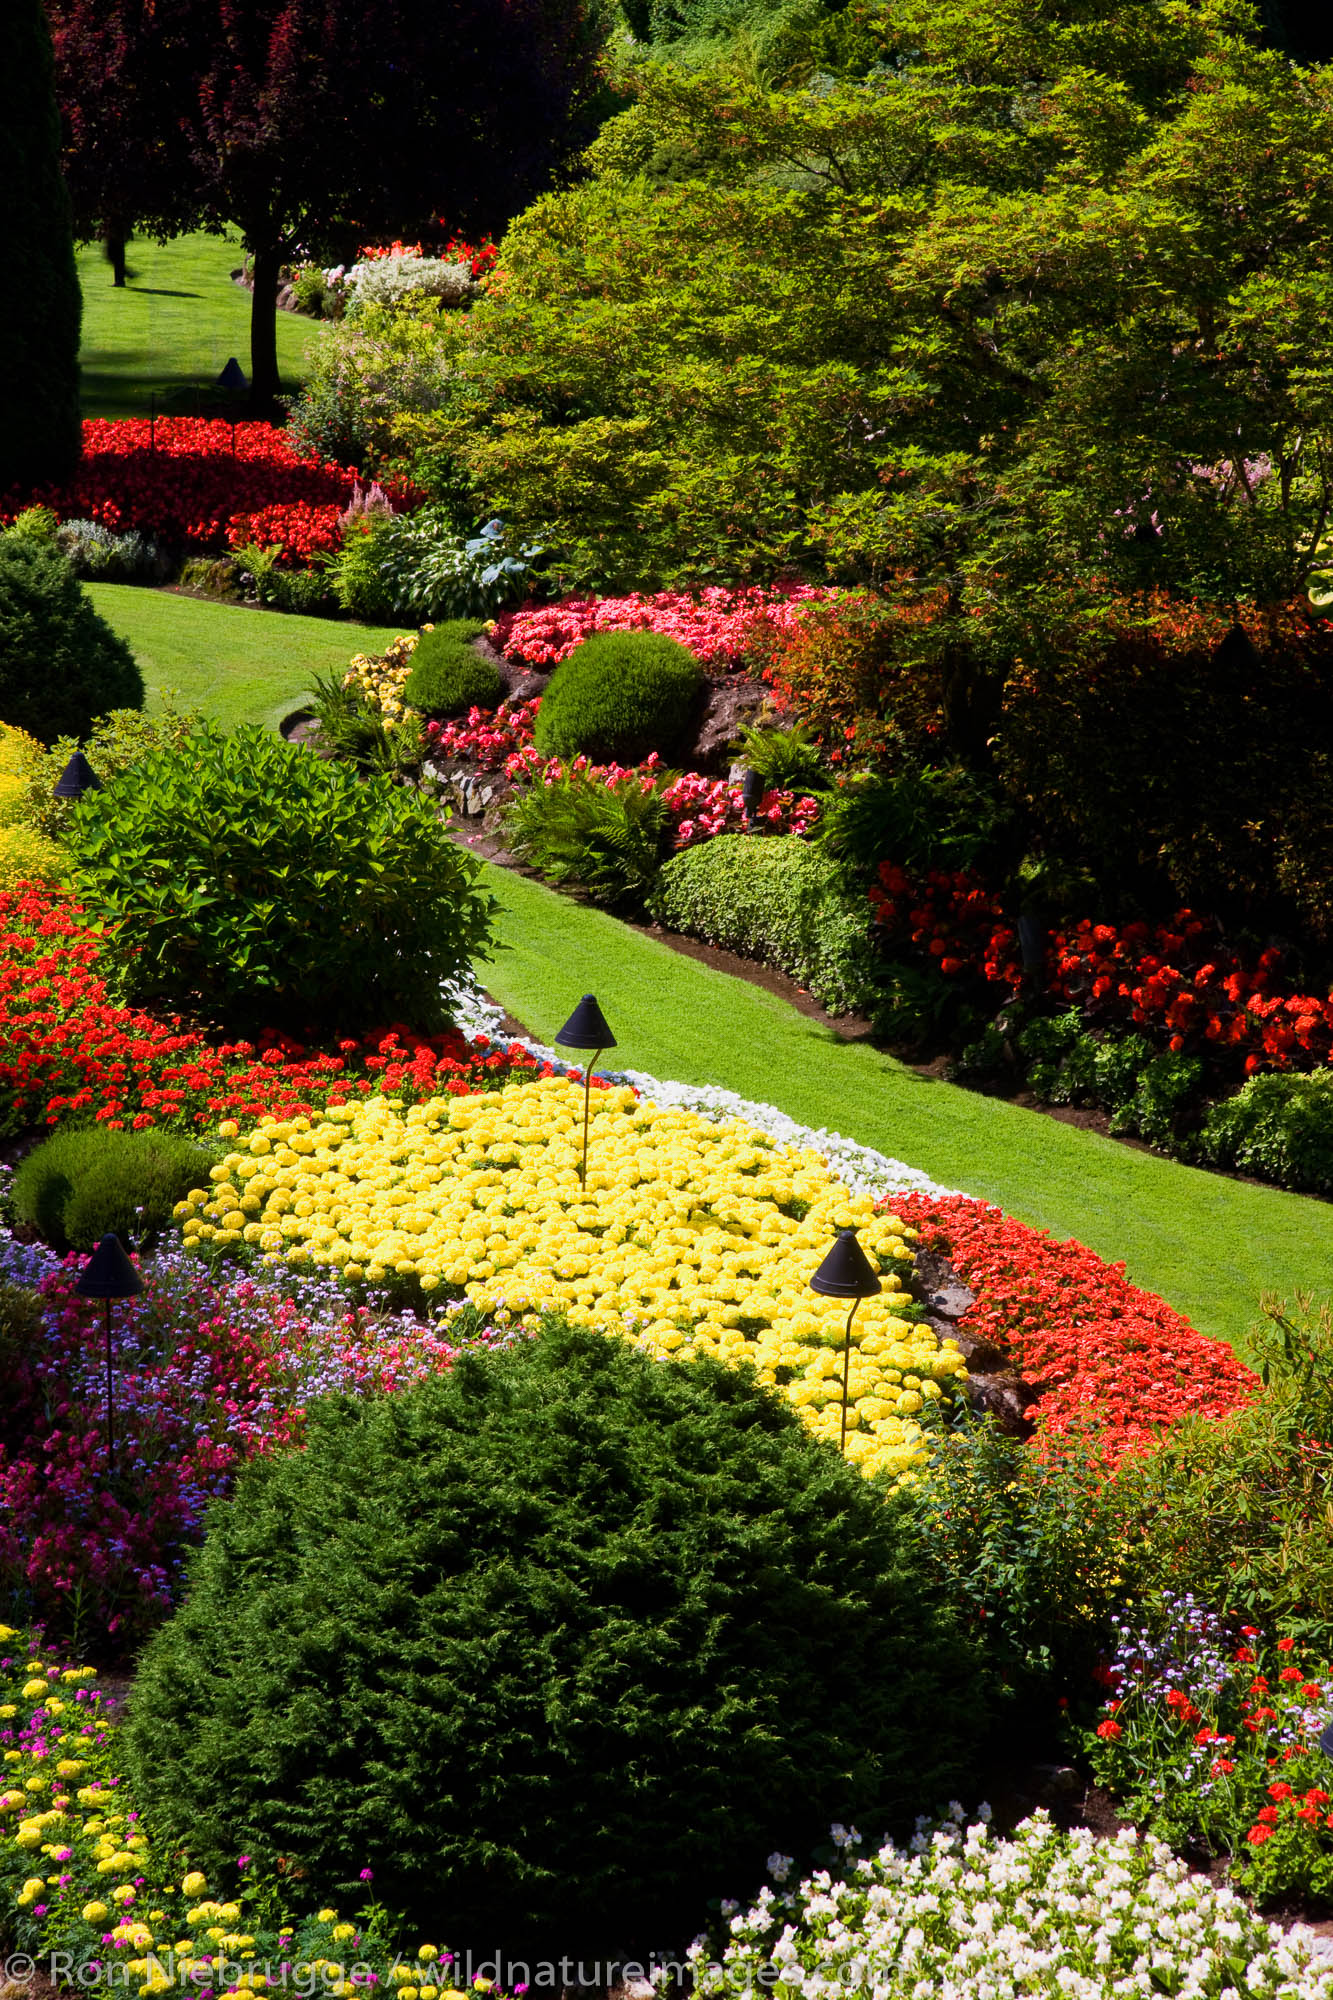 Sunken Garden at the Butchart Gardens, Victoria, Vancouver Island, British Columbia, Canada.